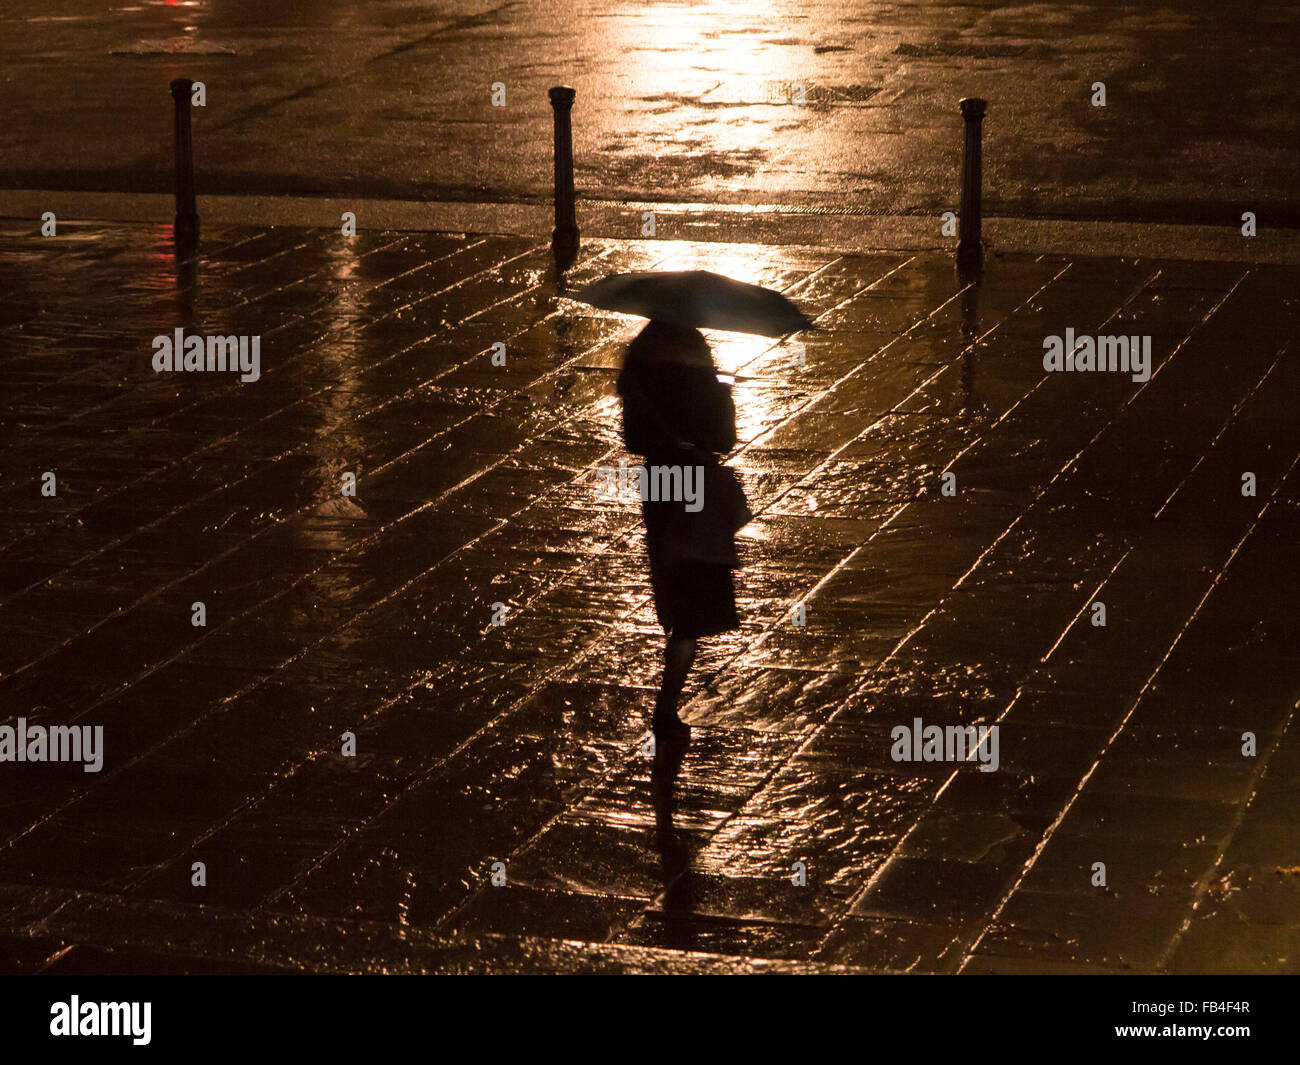 Walking through London in the rain at night Stock Photo